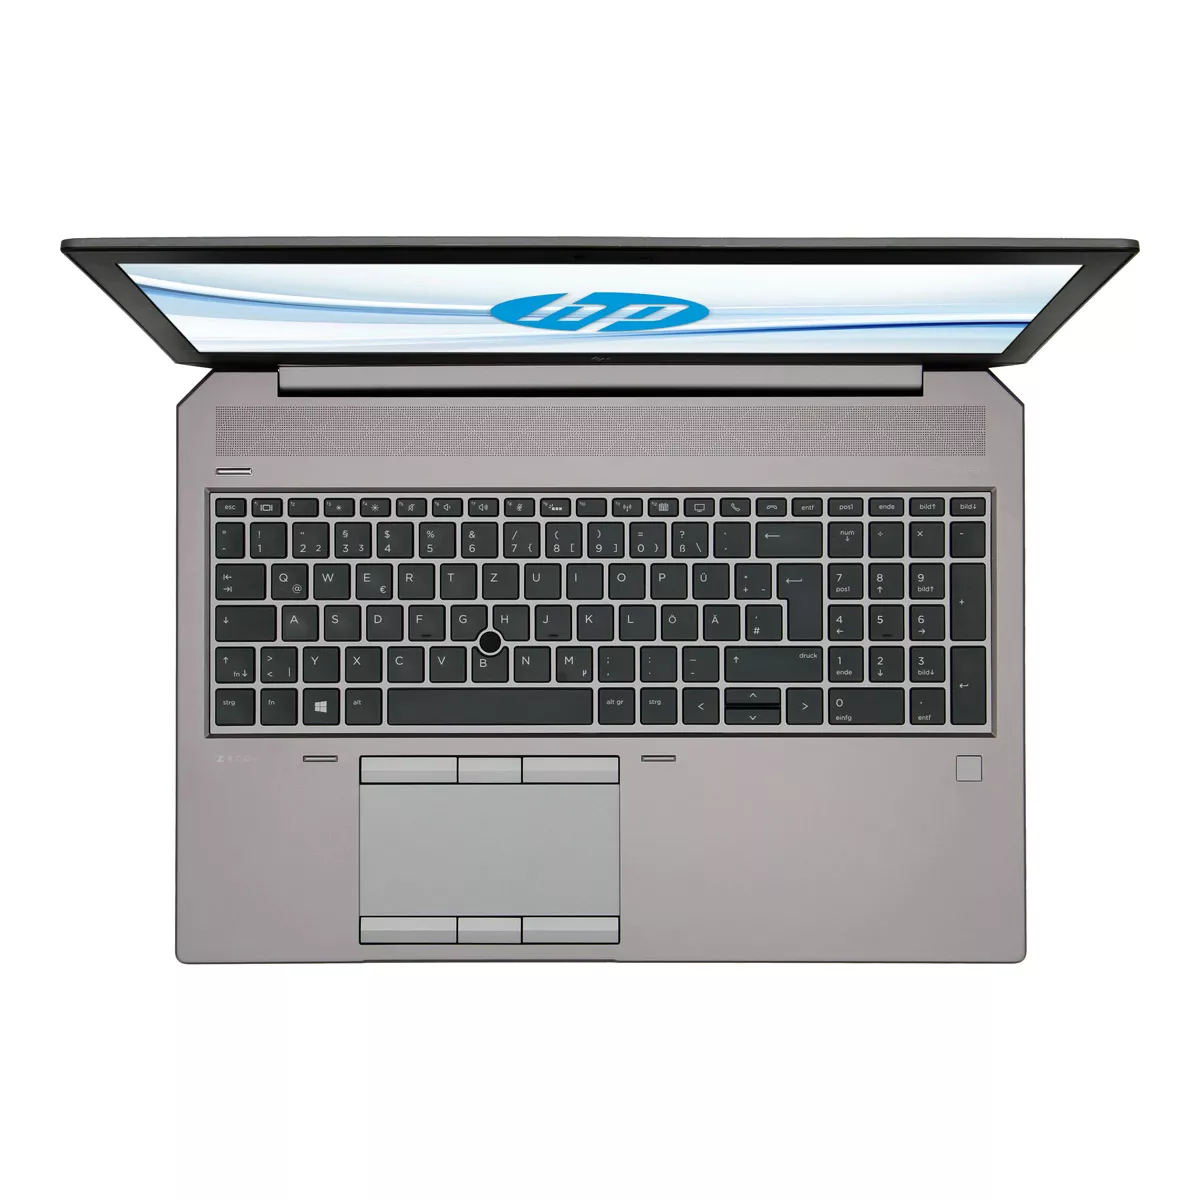 HP ZBook 15 G5 Core i7 8850H nVidia Quadro P2000M 16 GB 240 GB M.2 SSD Webcam A+